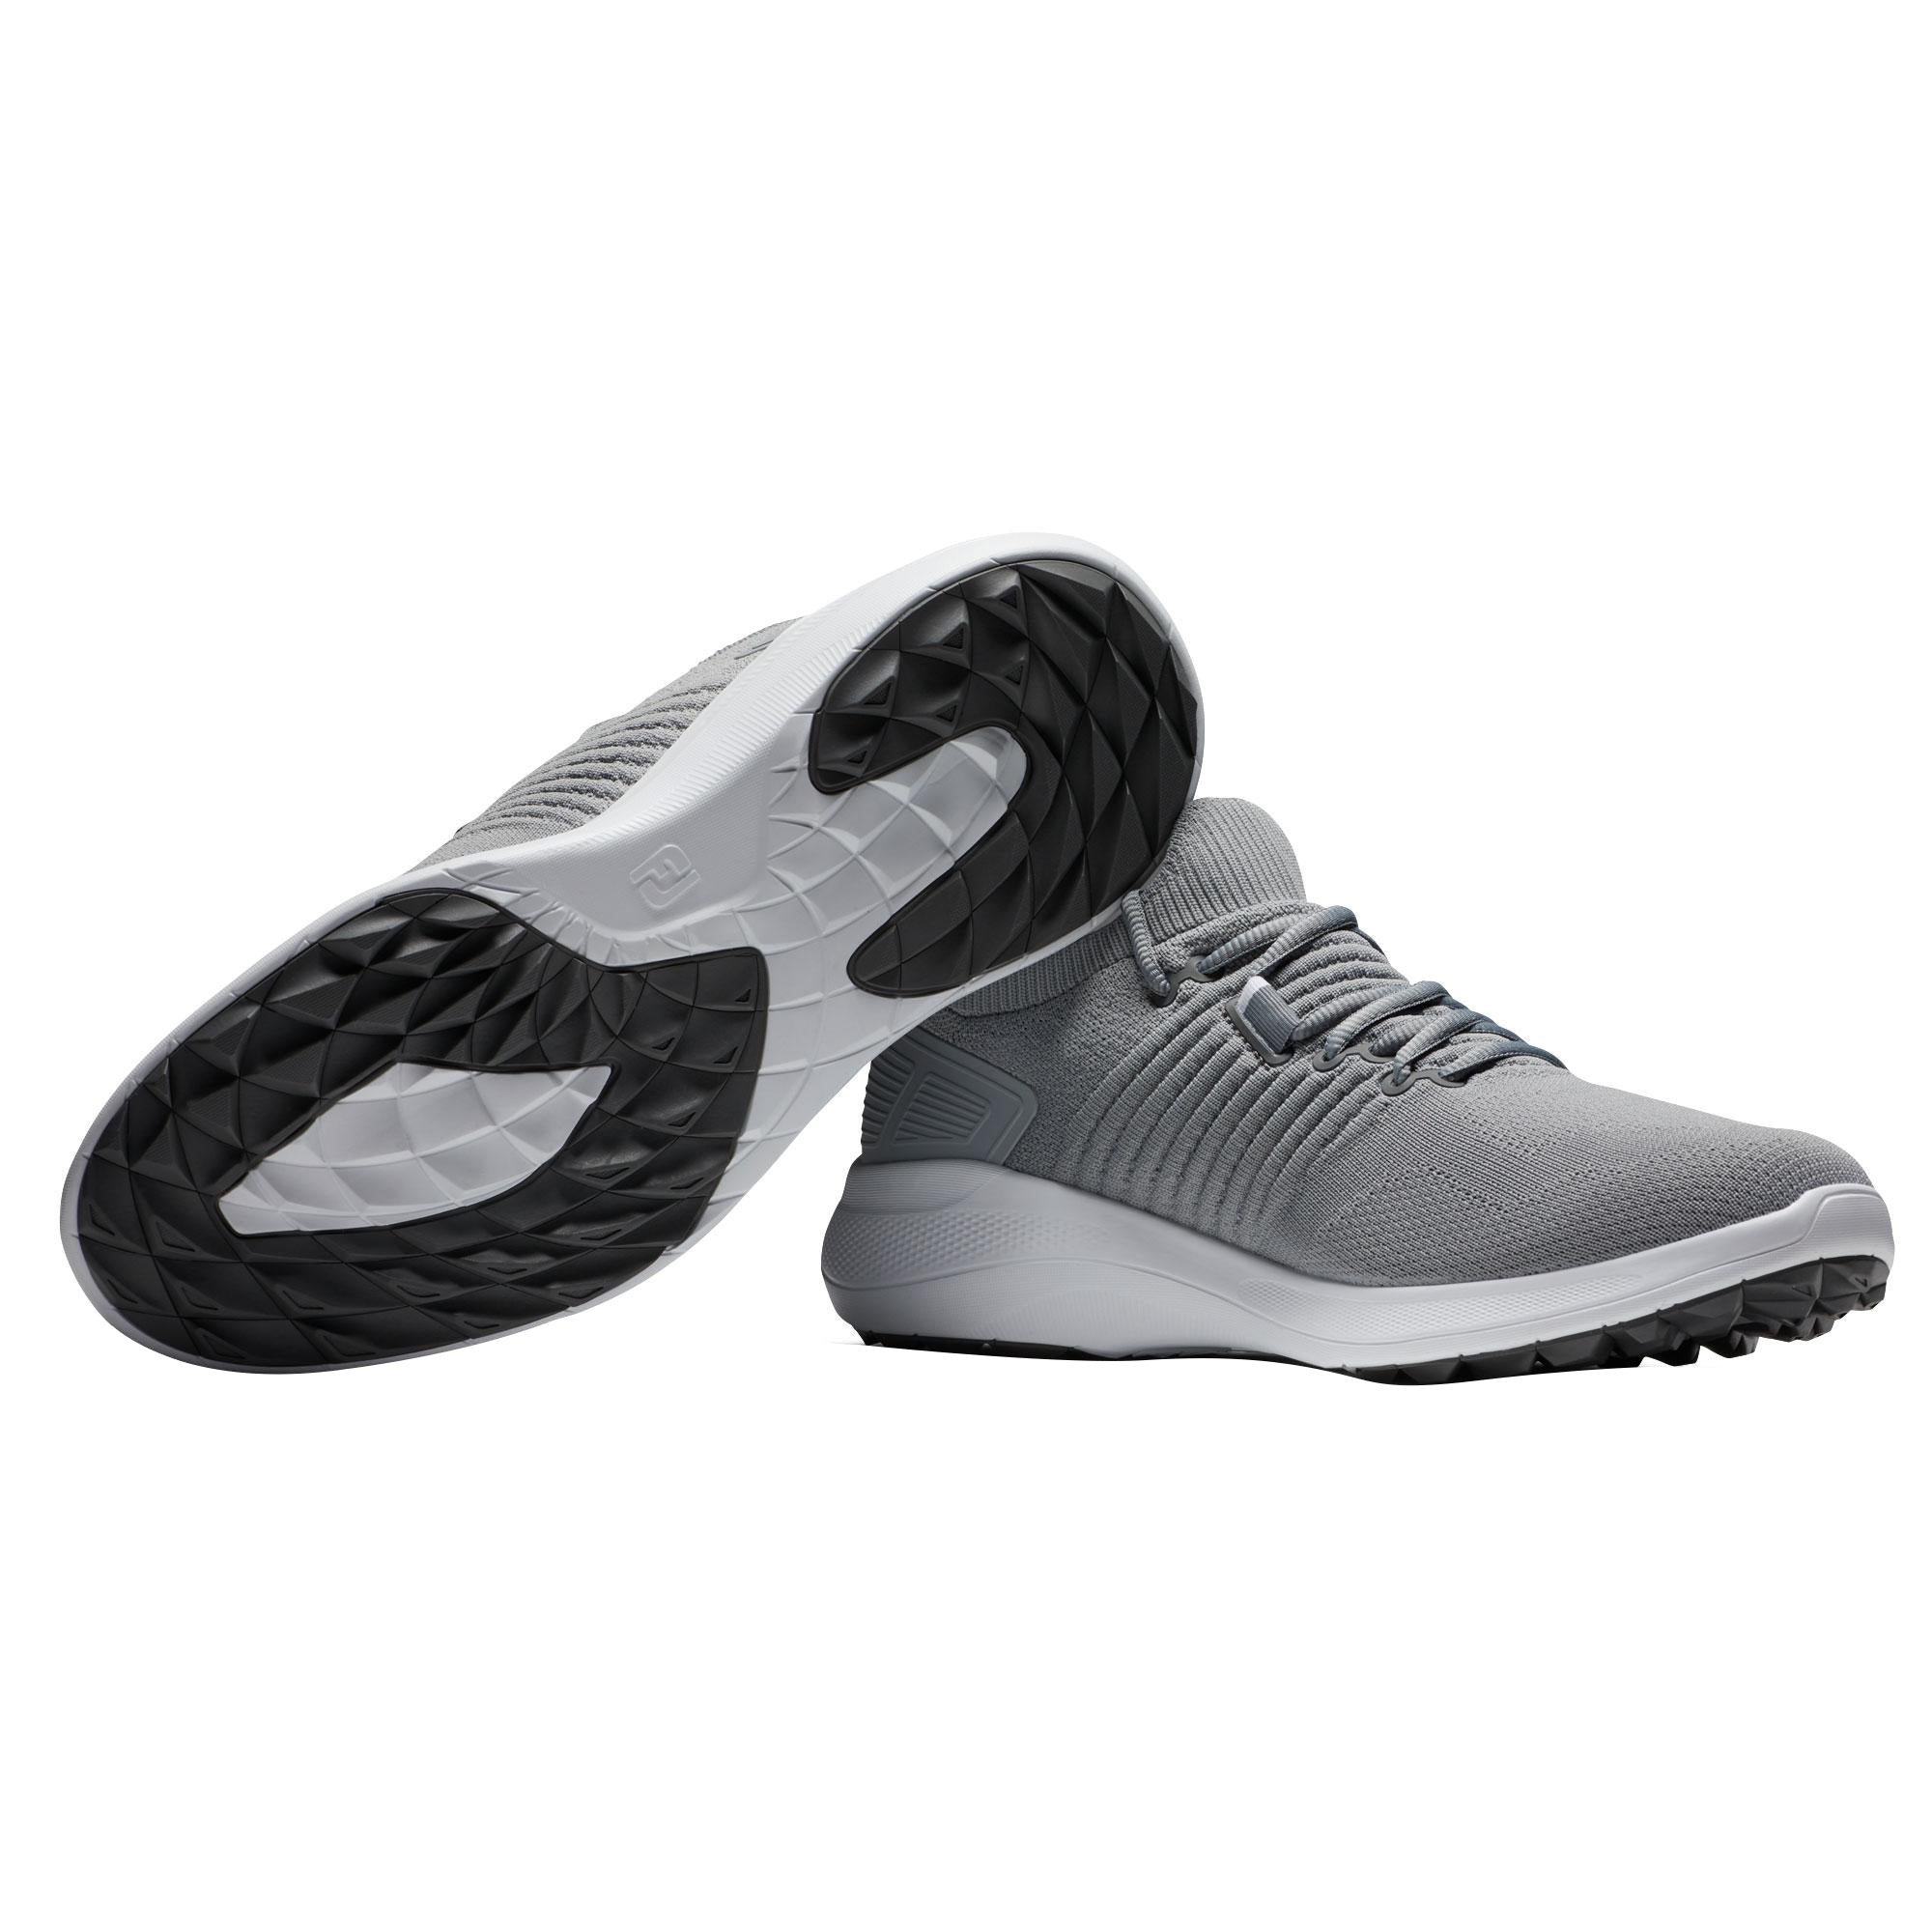 FootJoy FJ Flex XP Spikeless Golf Shoes 2021 Women